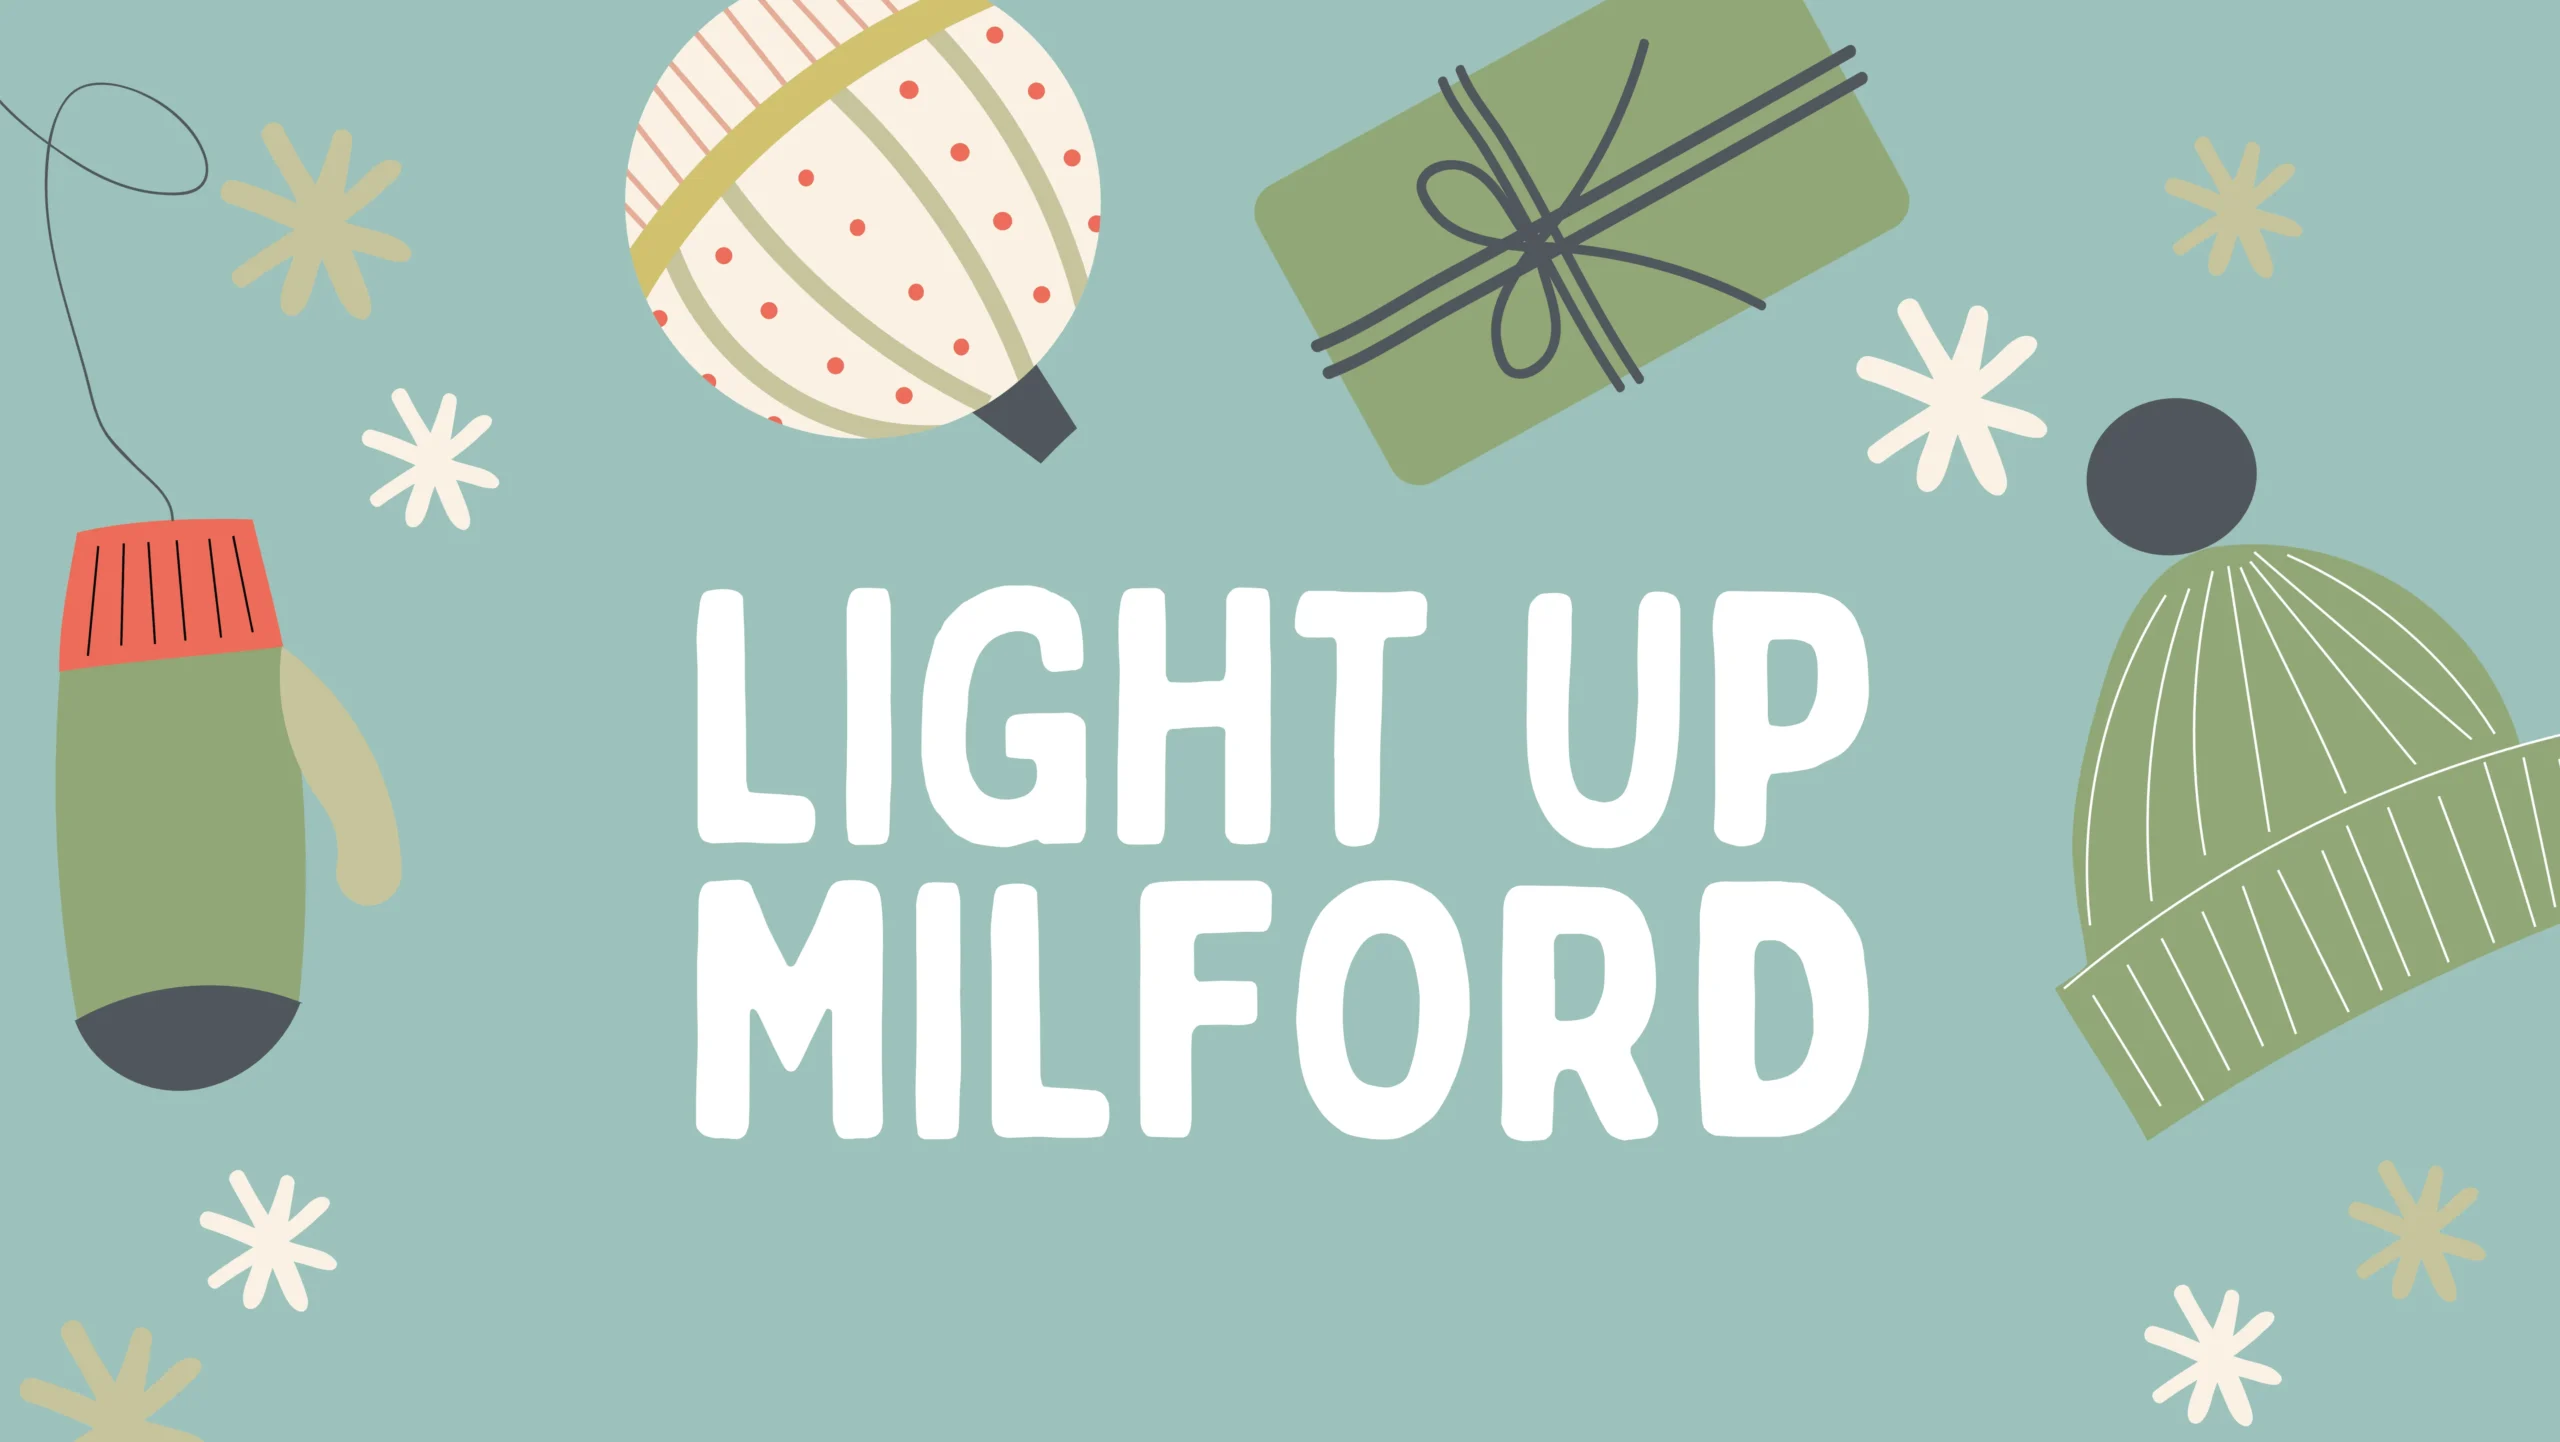 Light up milford